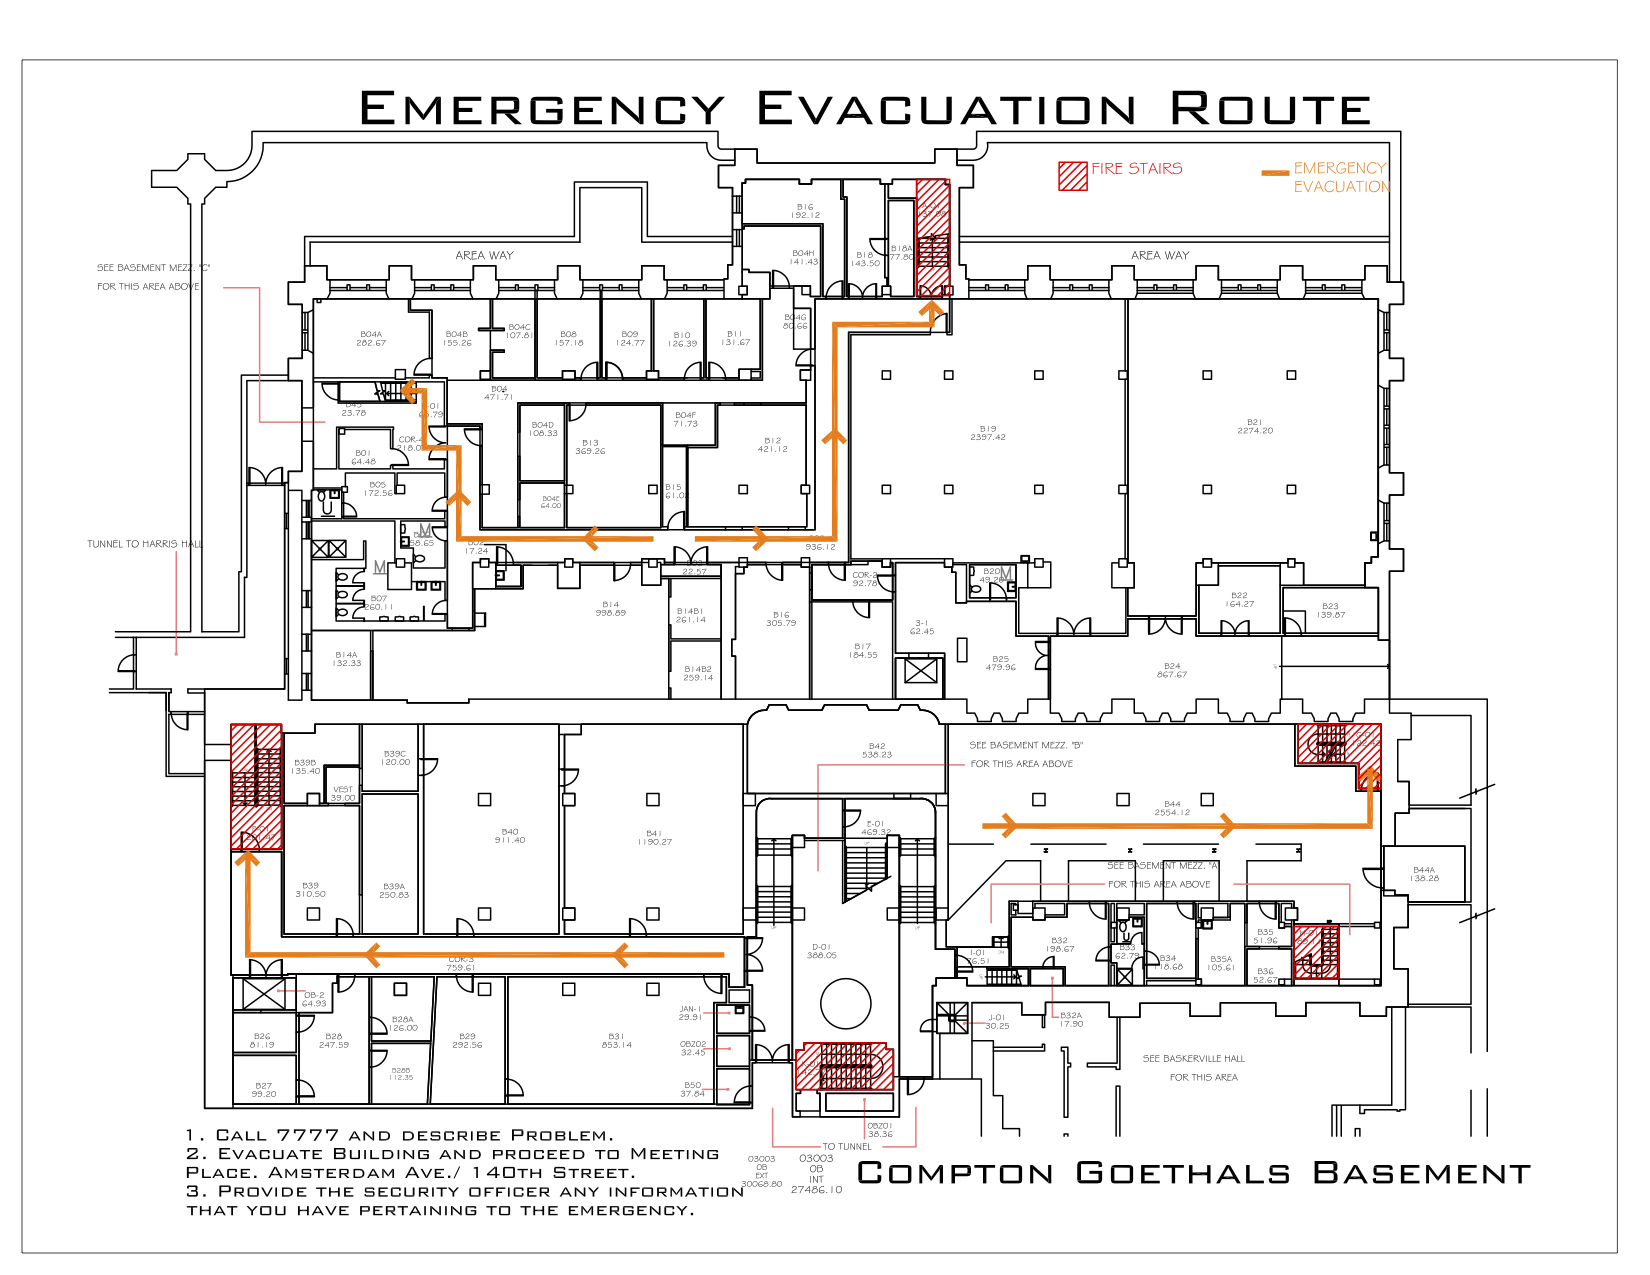 Compton Goethals Hall - Evacuation Routes 2